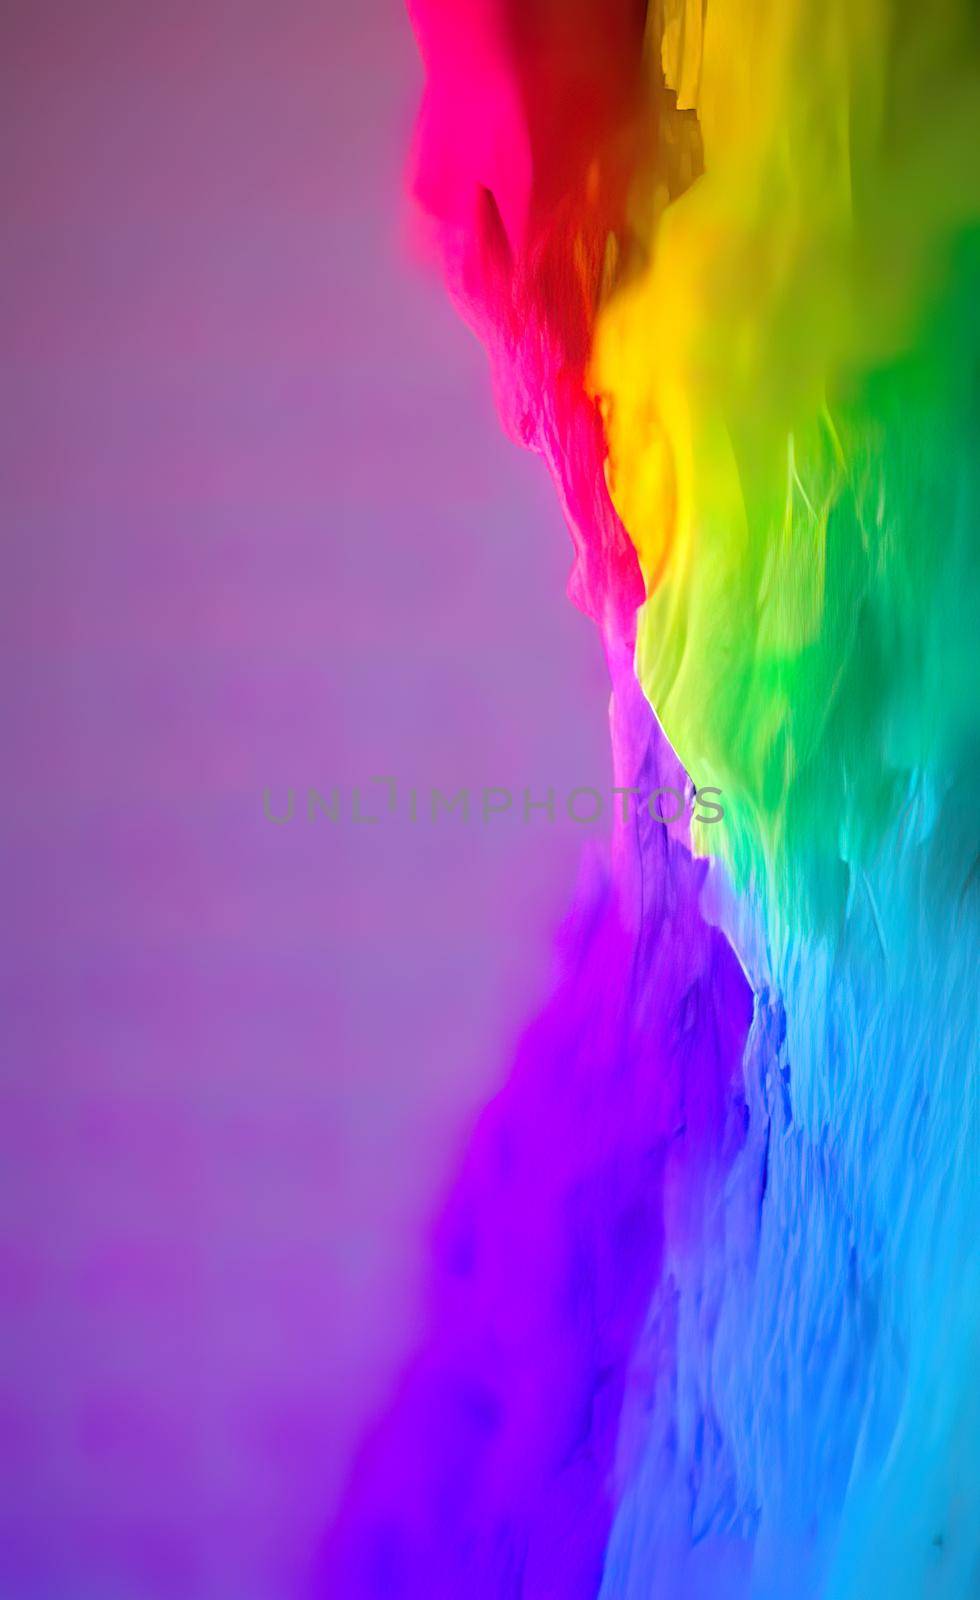 abstract powder paint background with splashes by yilmazsavaskandag